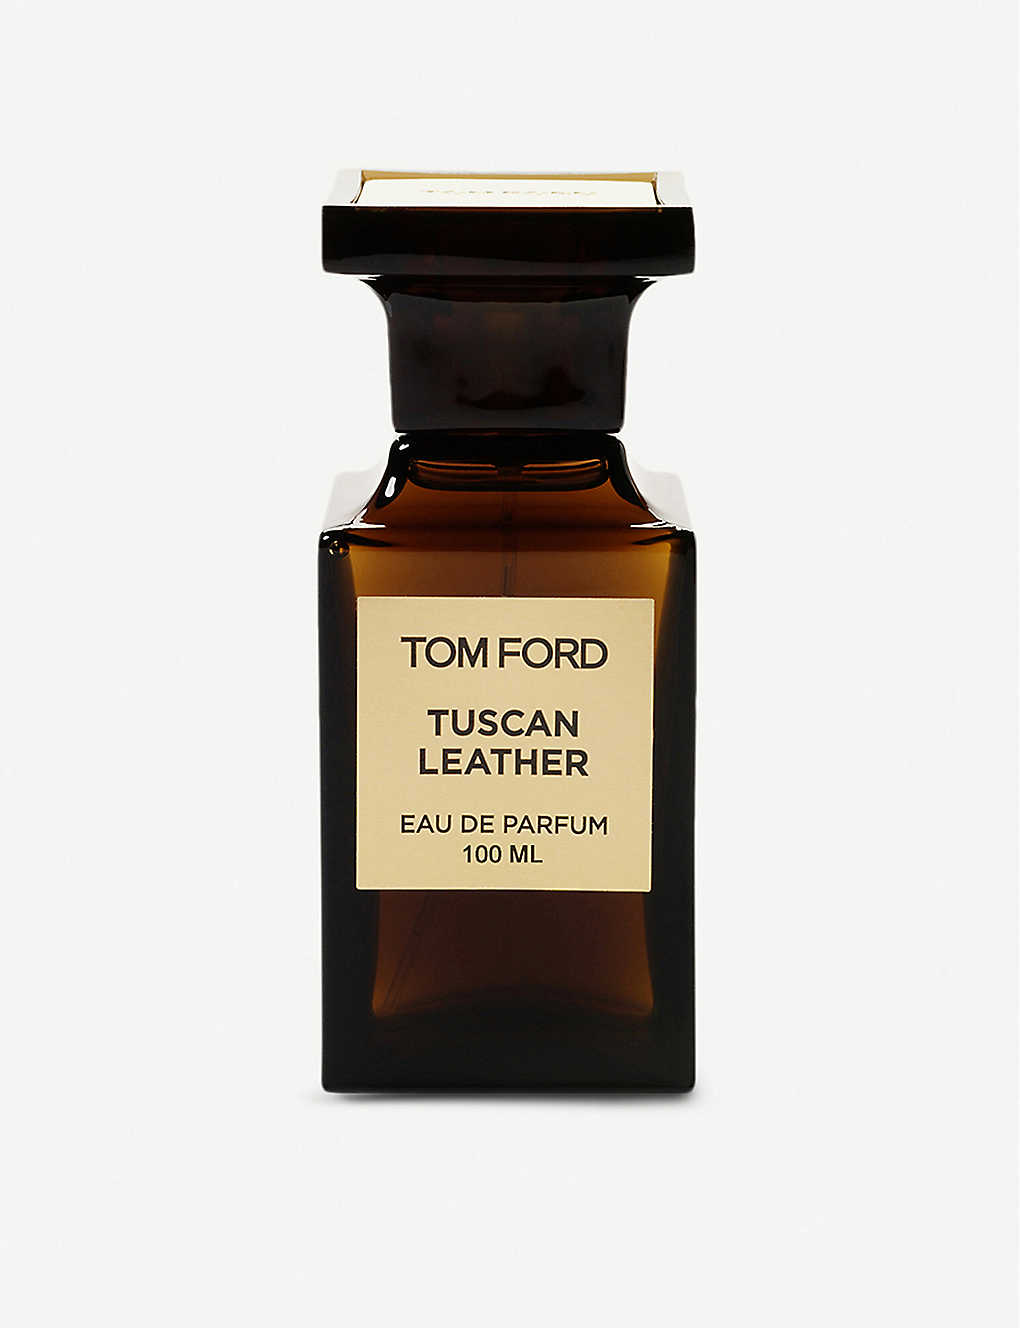 Tom Ford Private Blend Tuscan Leather Eau De Parfum 100ml